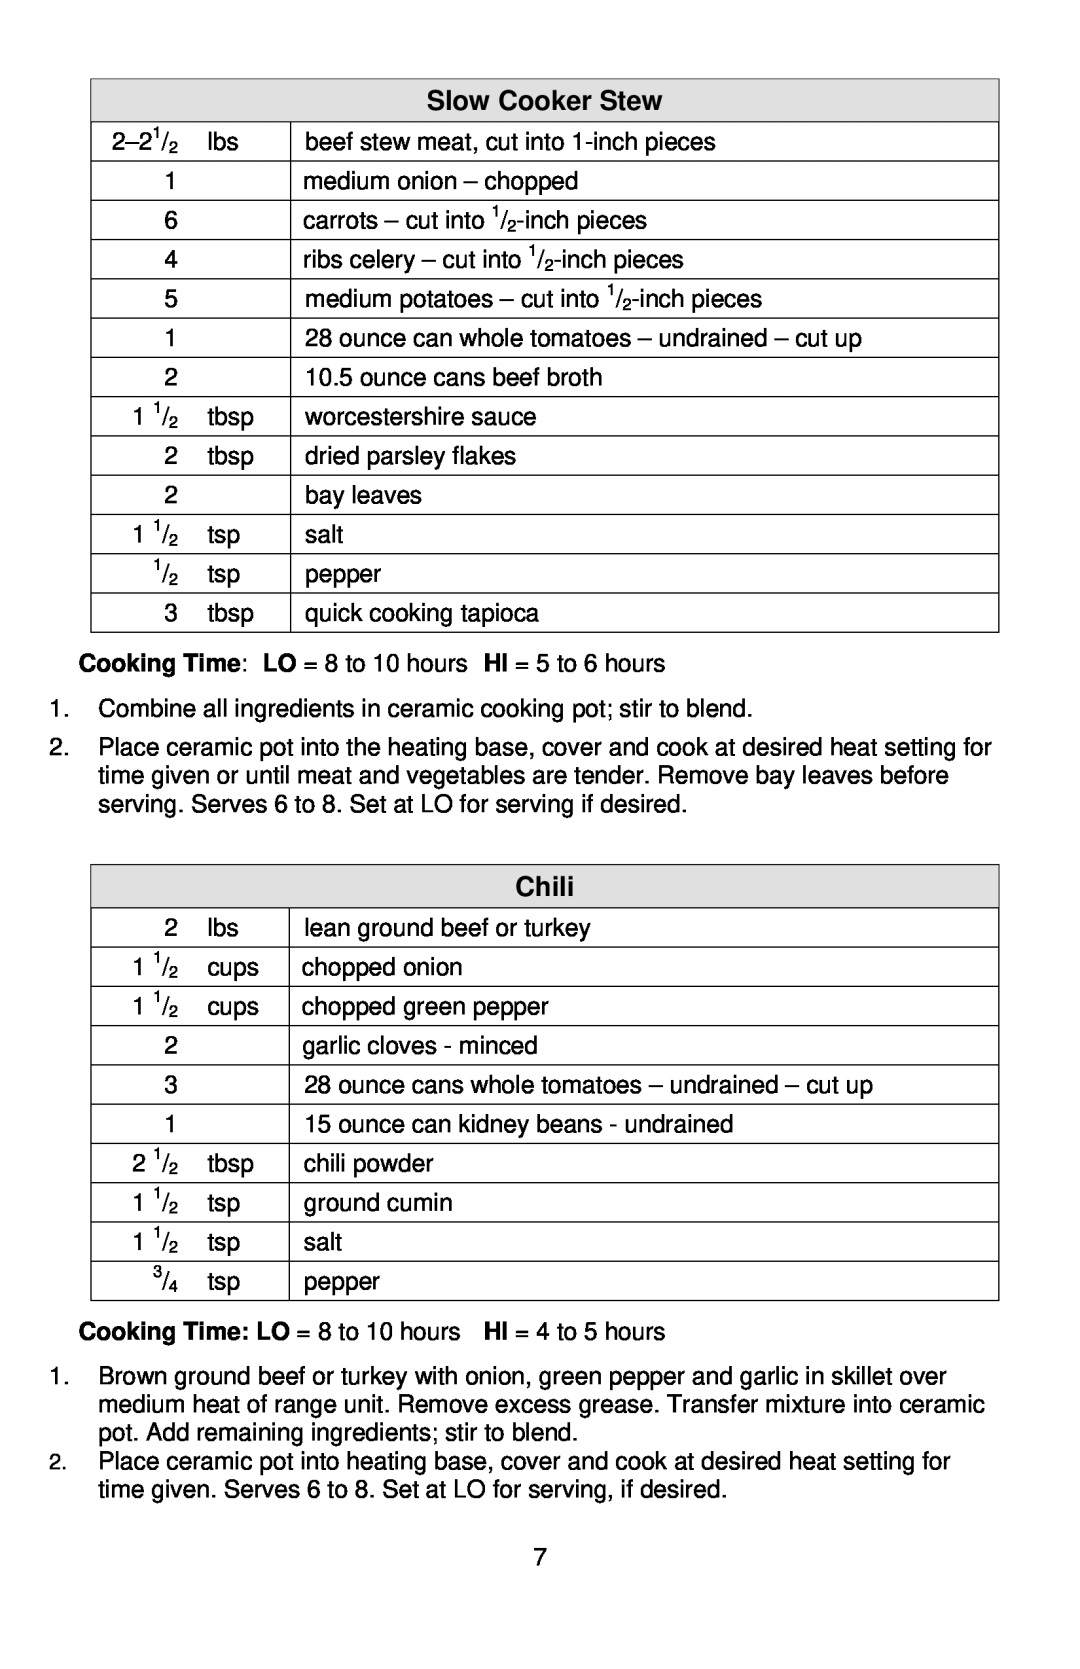 West Bend 5 6 Quart CrockeryTM Cooker instruction manual Slow Cooker Stew, Chili, Cooking Time 